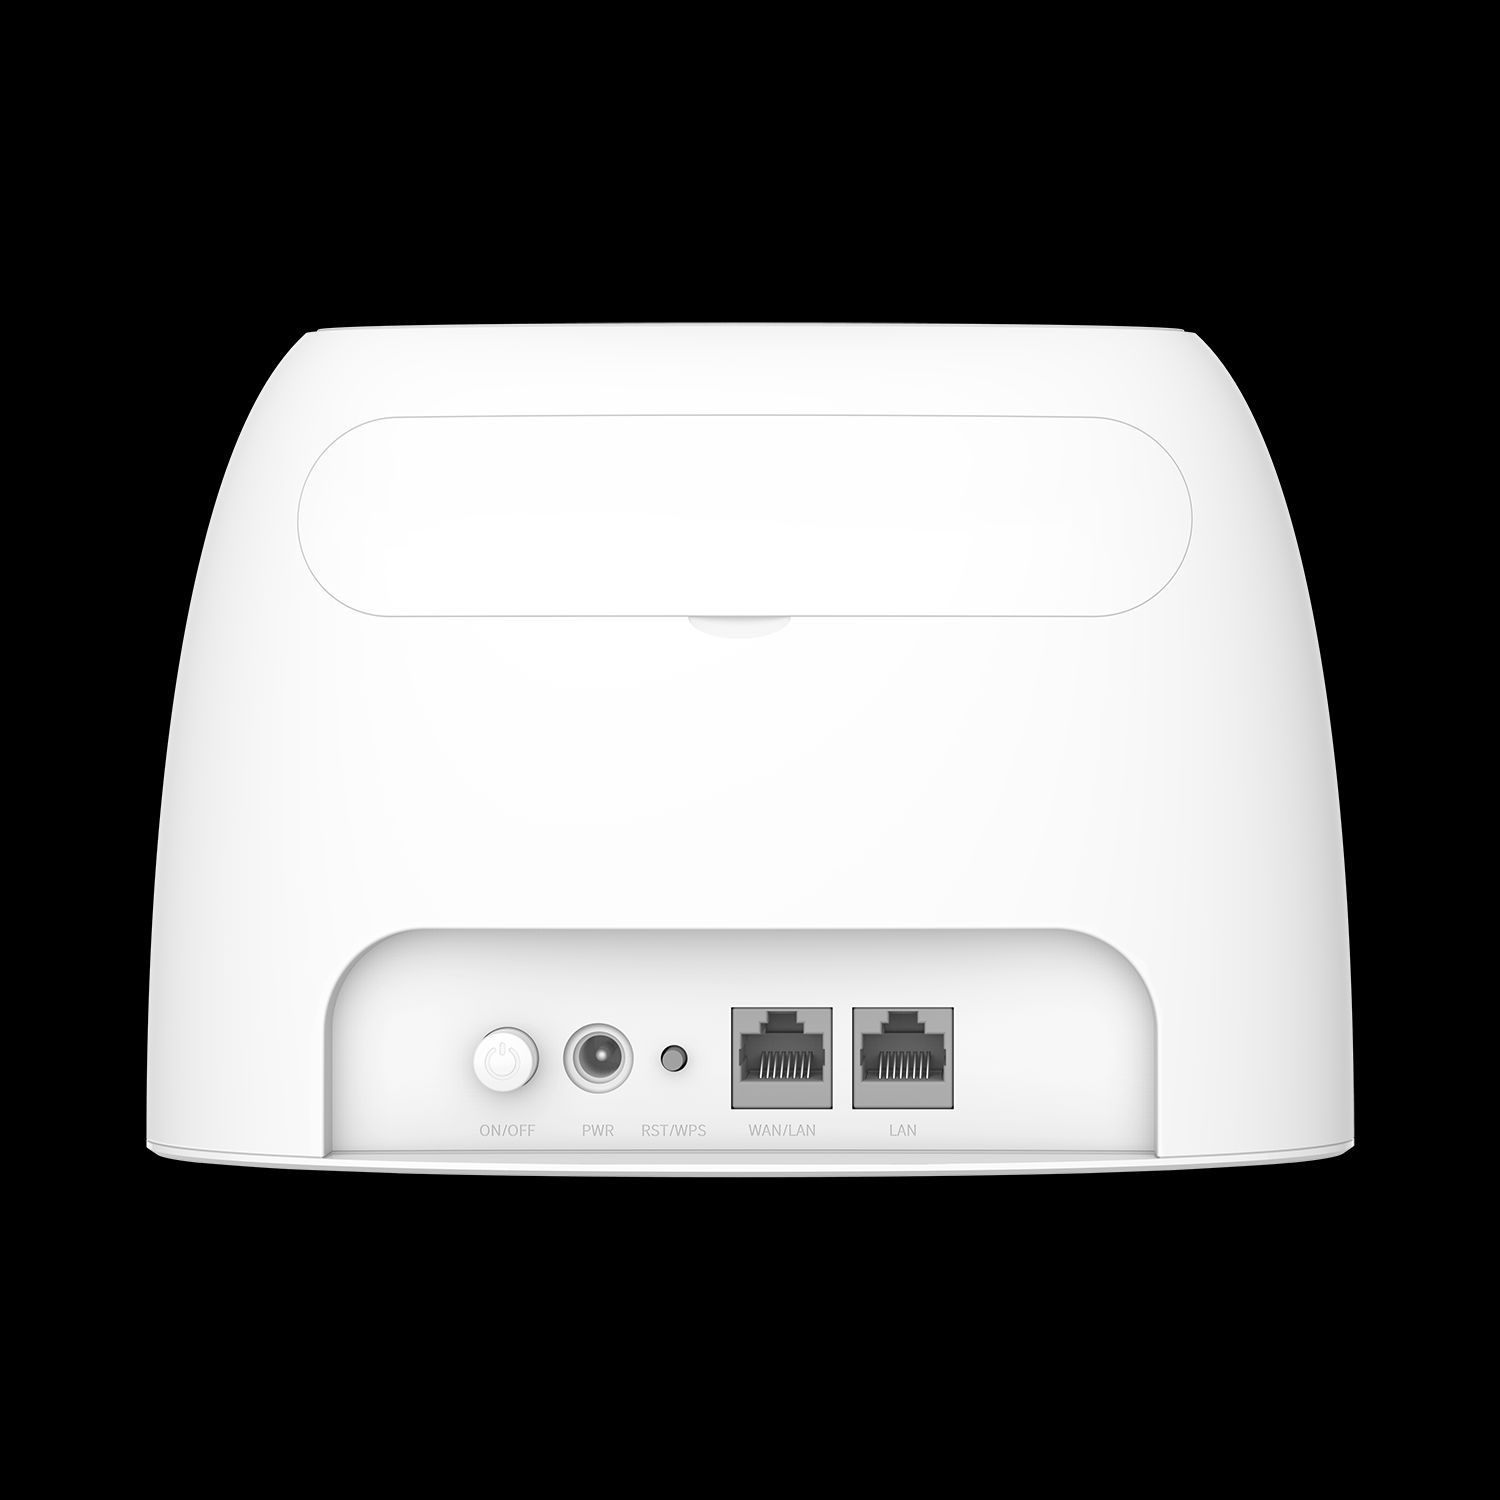 Tenda 4g03. Tenda 4g03 Wi-Fi роутер (маршрутизатор) n300 4g LTE SIM. Tenda 4g 03 LTE. Tenda 4g03 Wi-Fi роутер LTE/3g/4g cat4, 802.11b/g/n, 2.4GHZ:300mbps3. Tenda WIFI роутер v300.